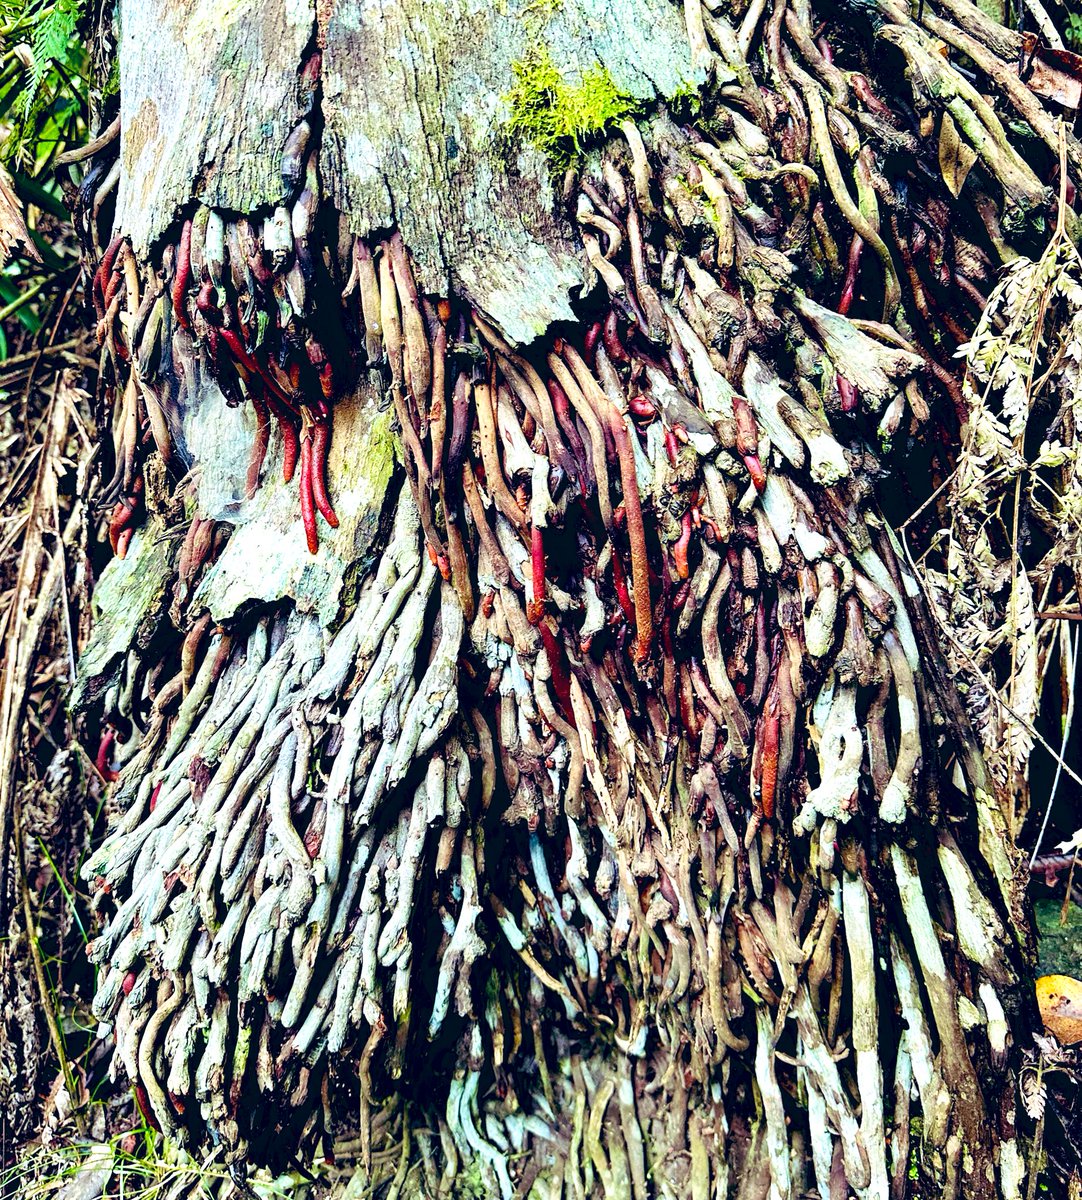 Alien or tree? #rainforest #tree